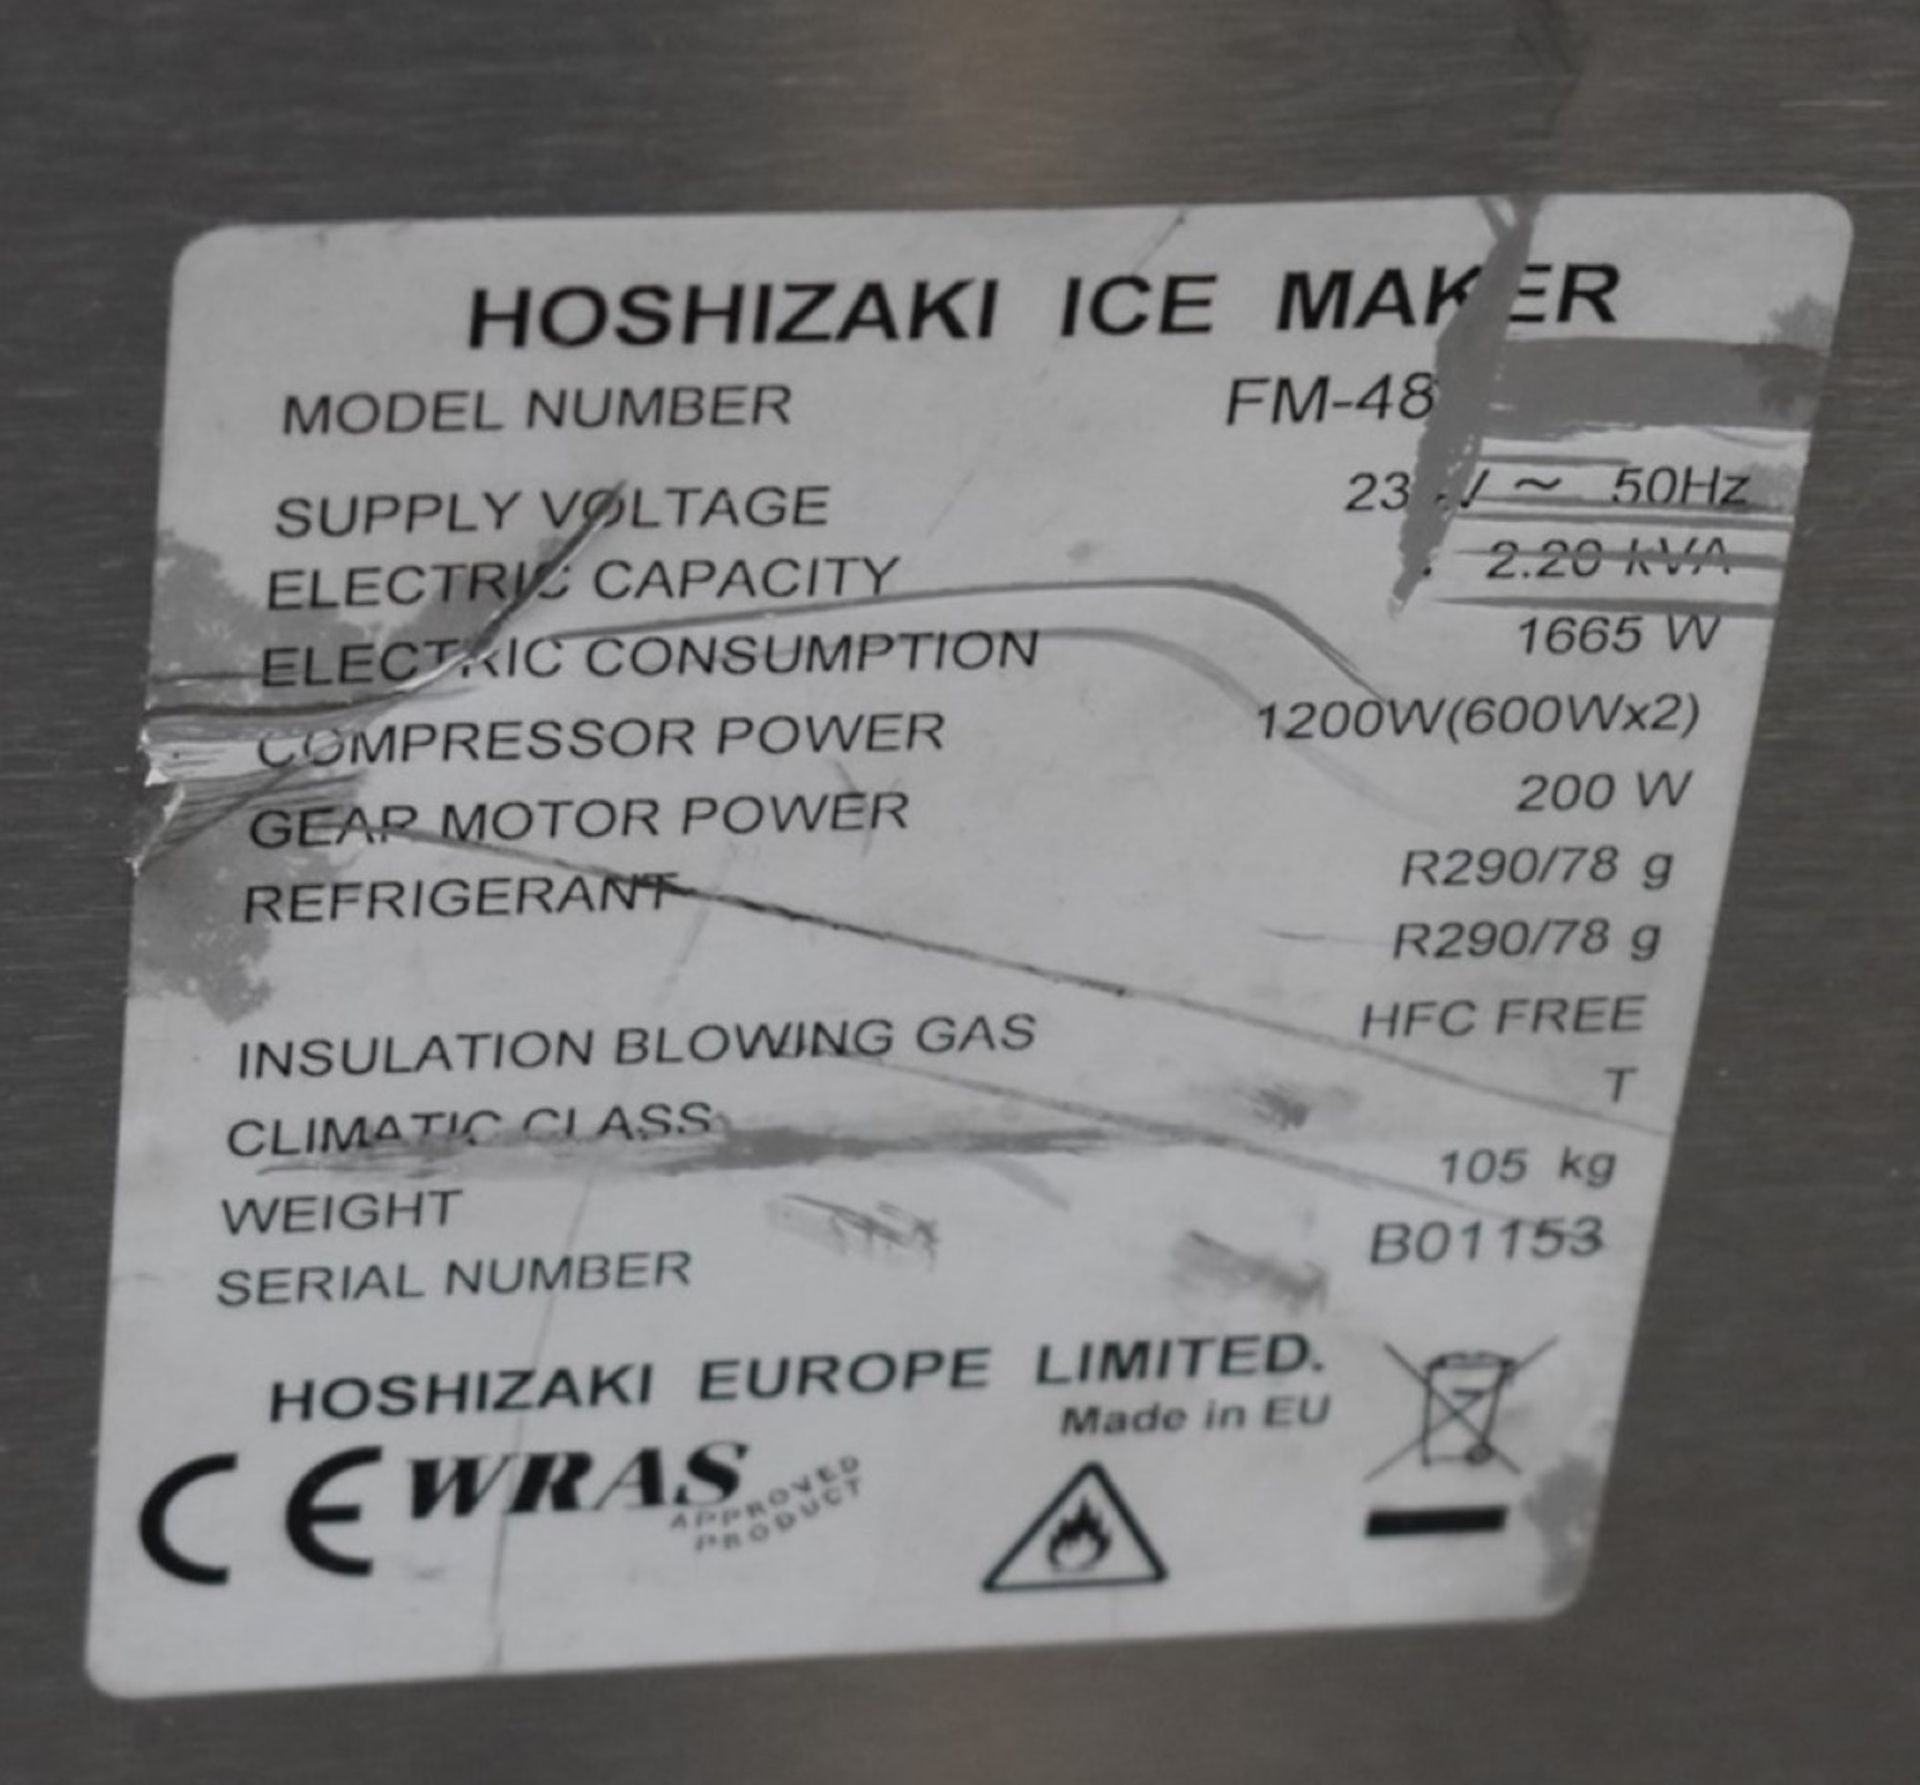 1 x Hoshizaki FM-480AKE Modular Ice Flaker With Follett Storage Bin and Transport System - RRP £9500 - Image 14 of 20